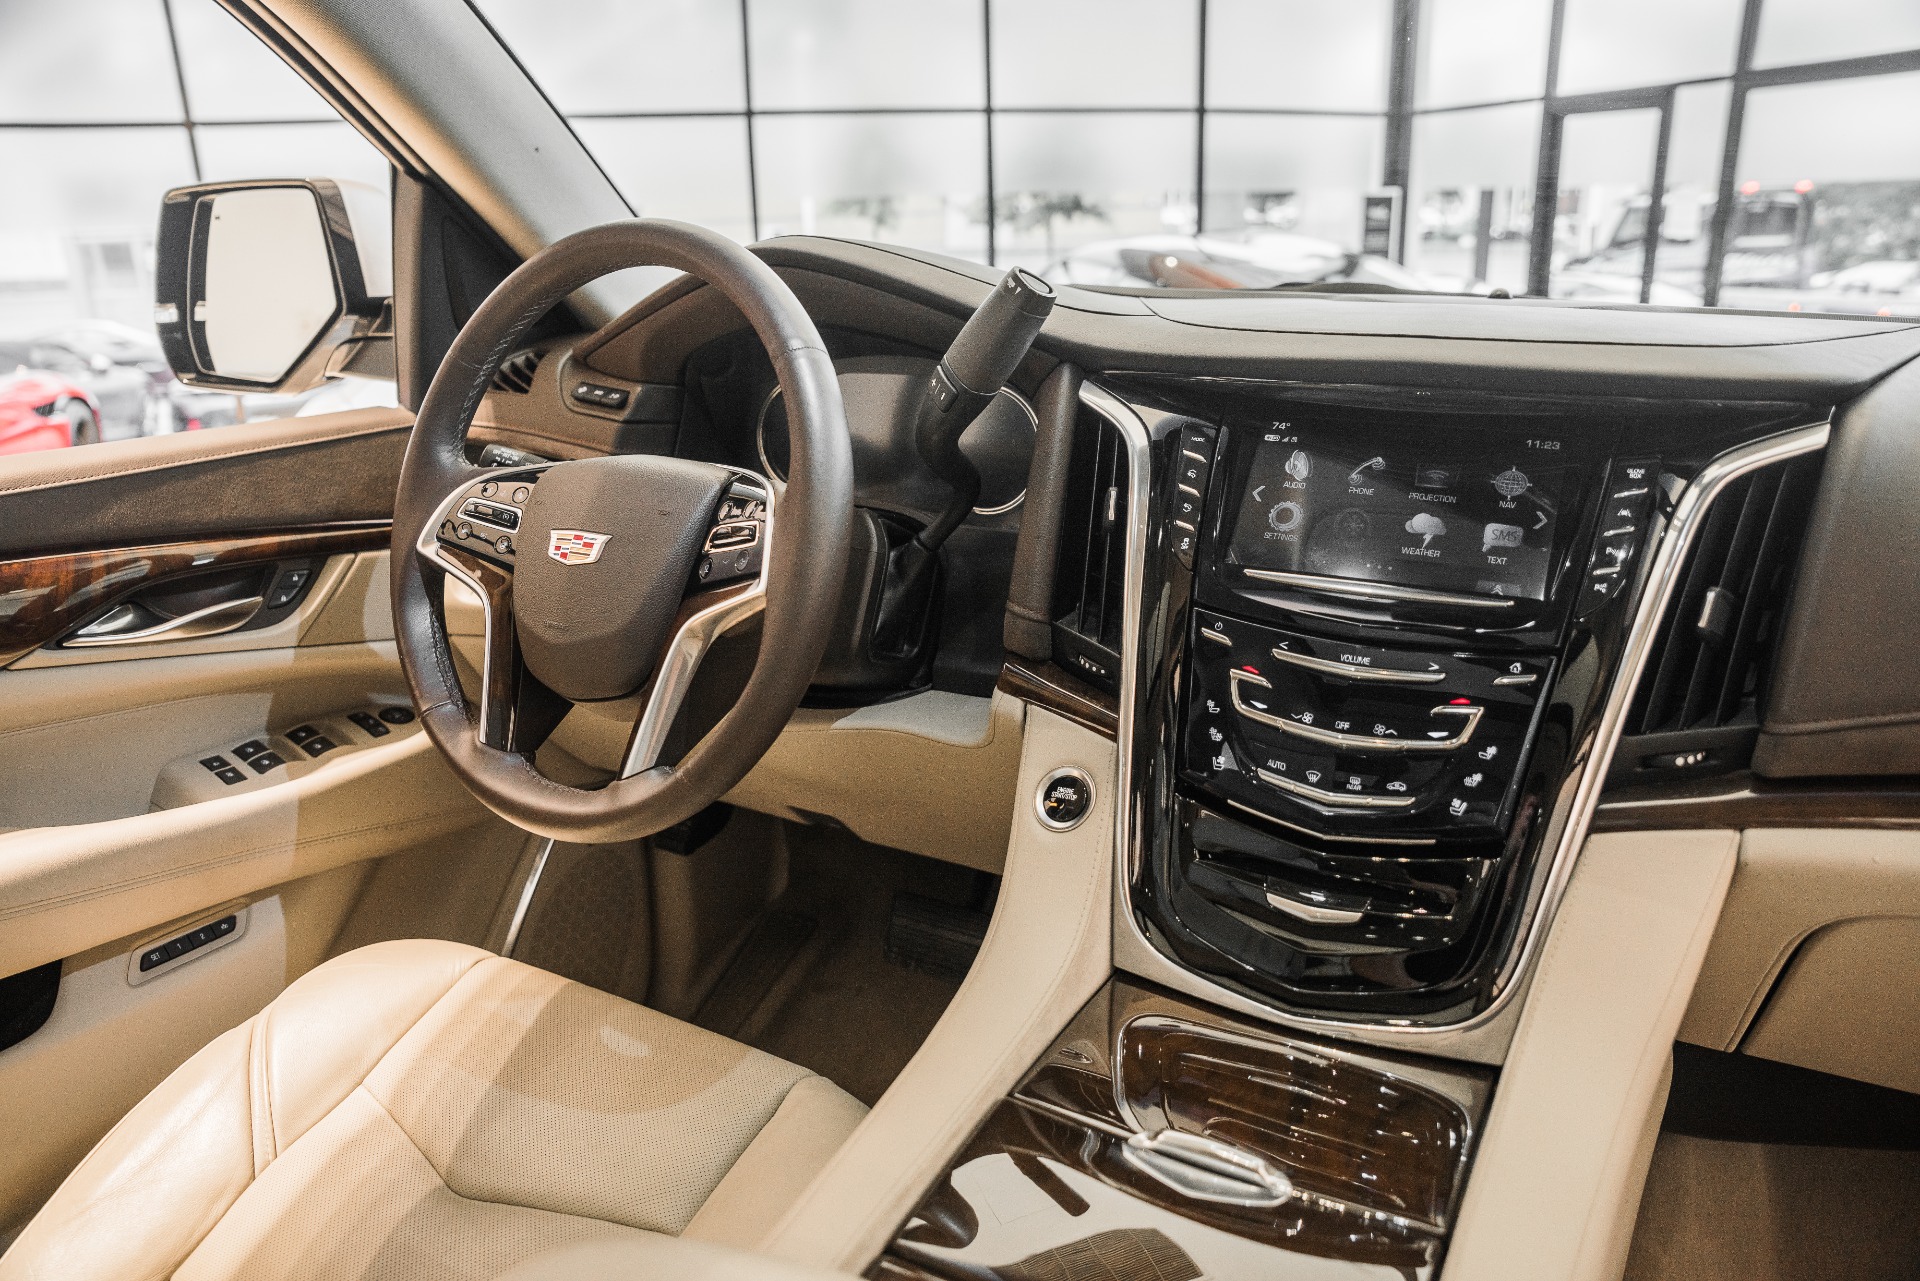 2017 Cadillac Escalade Luxury For